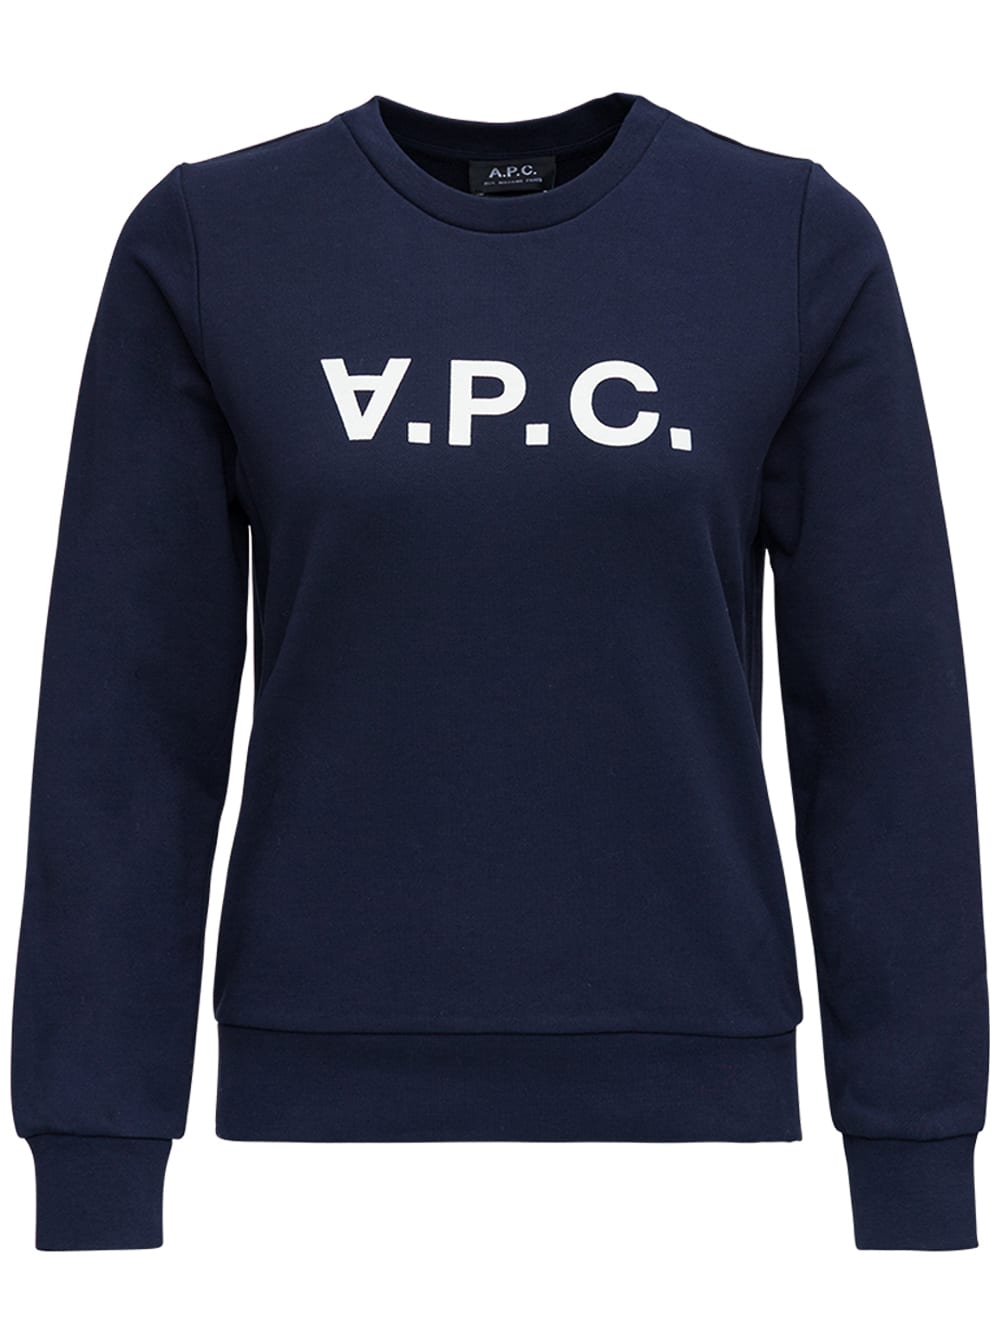 A.P.C. Blue Cotton Sweatshirt With Logo Print